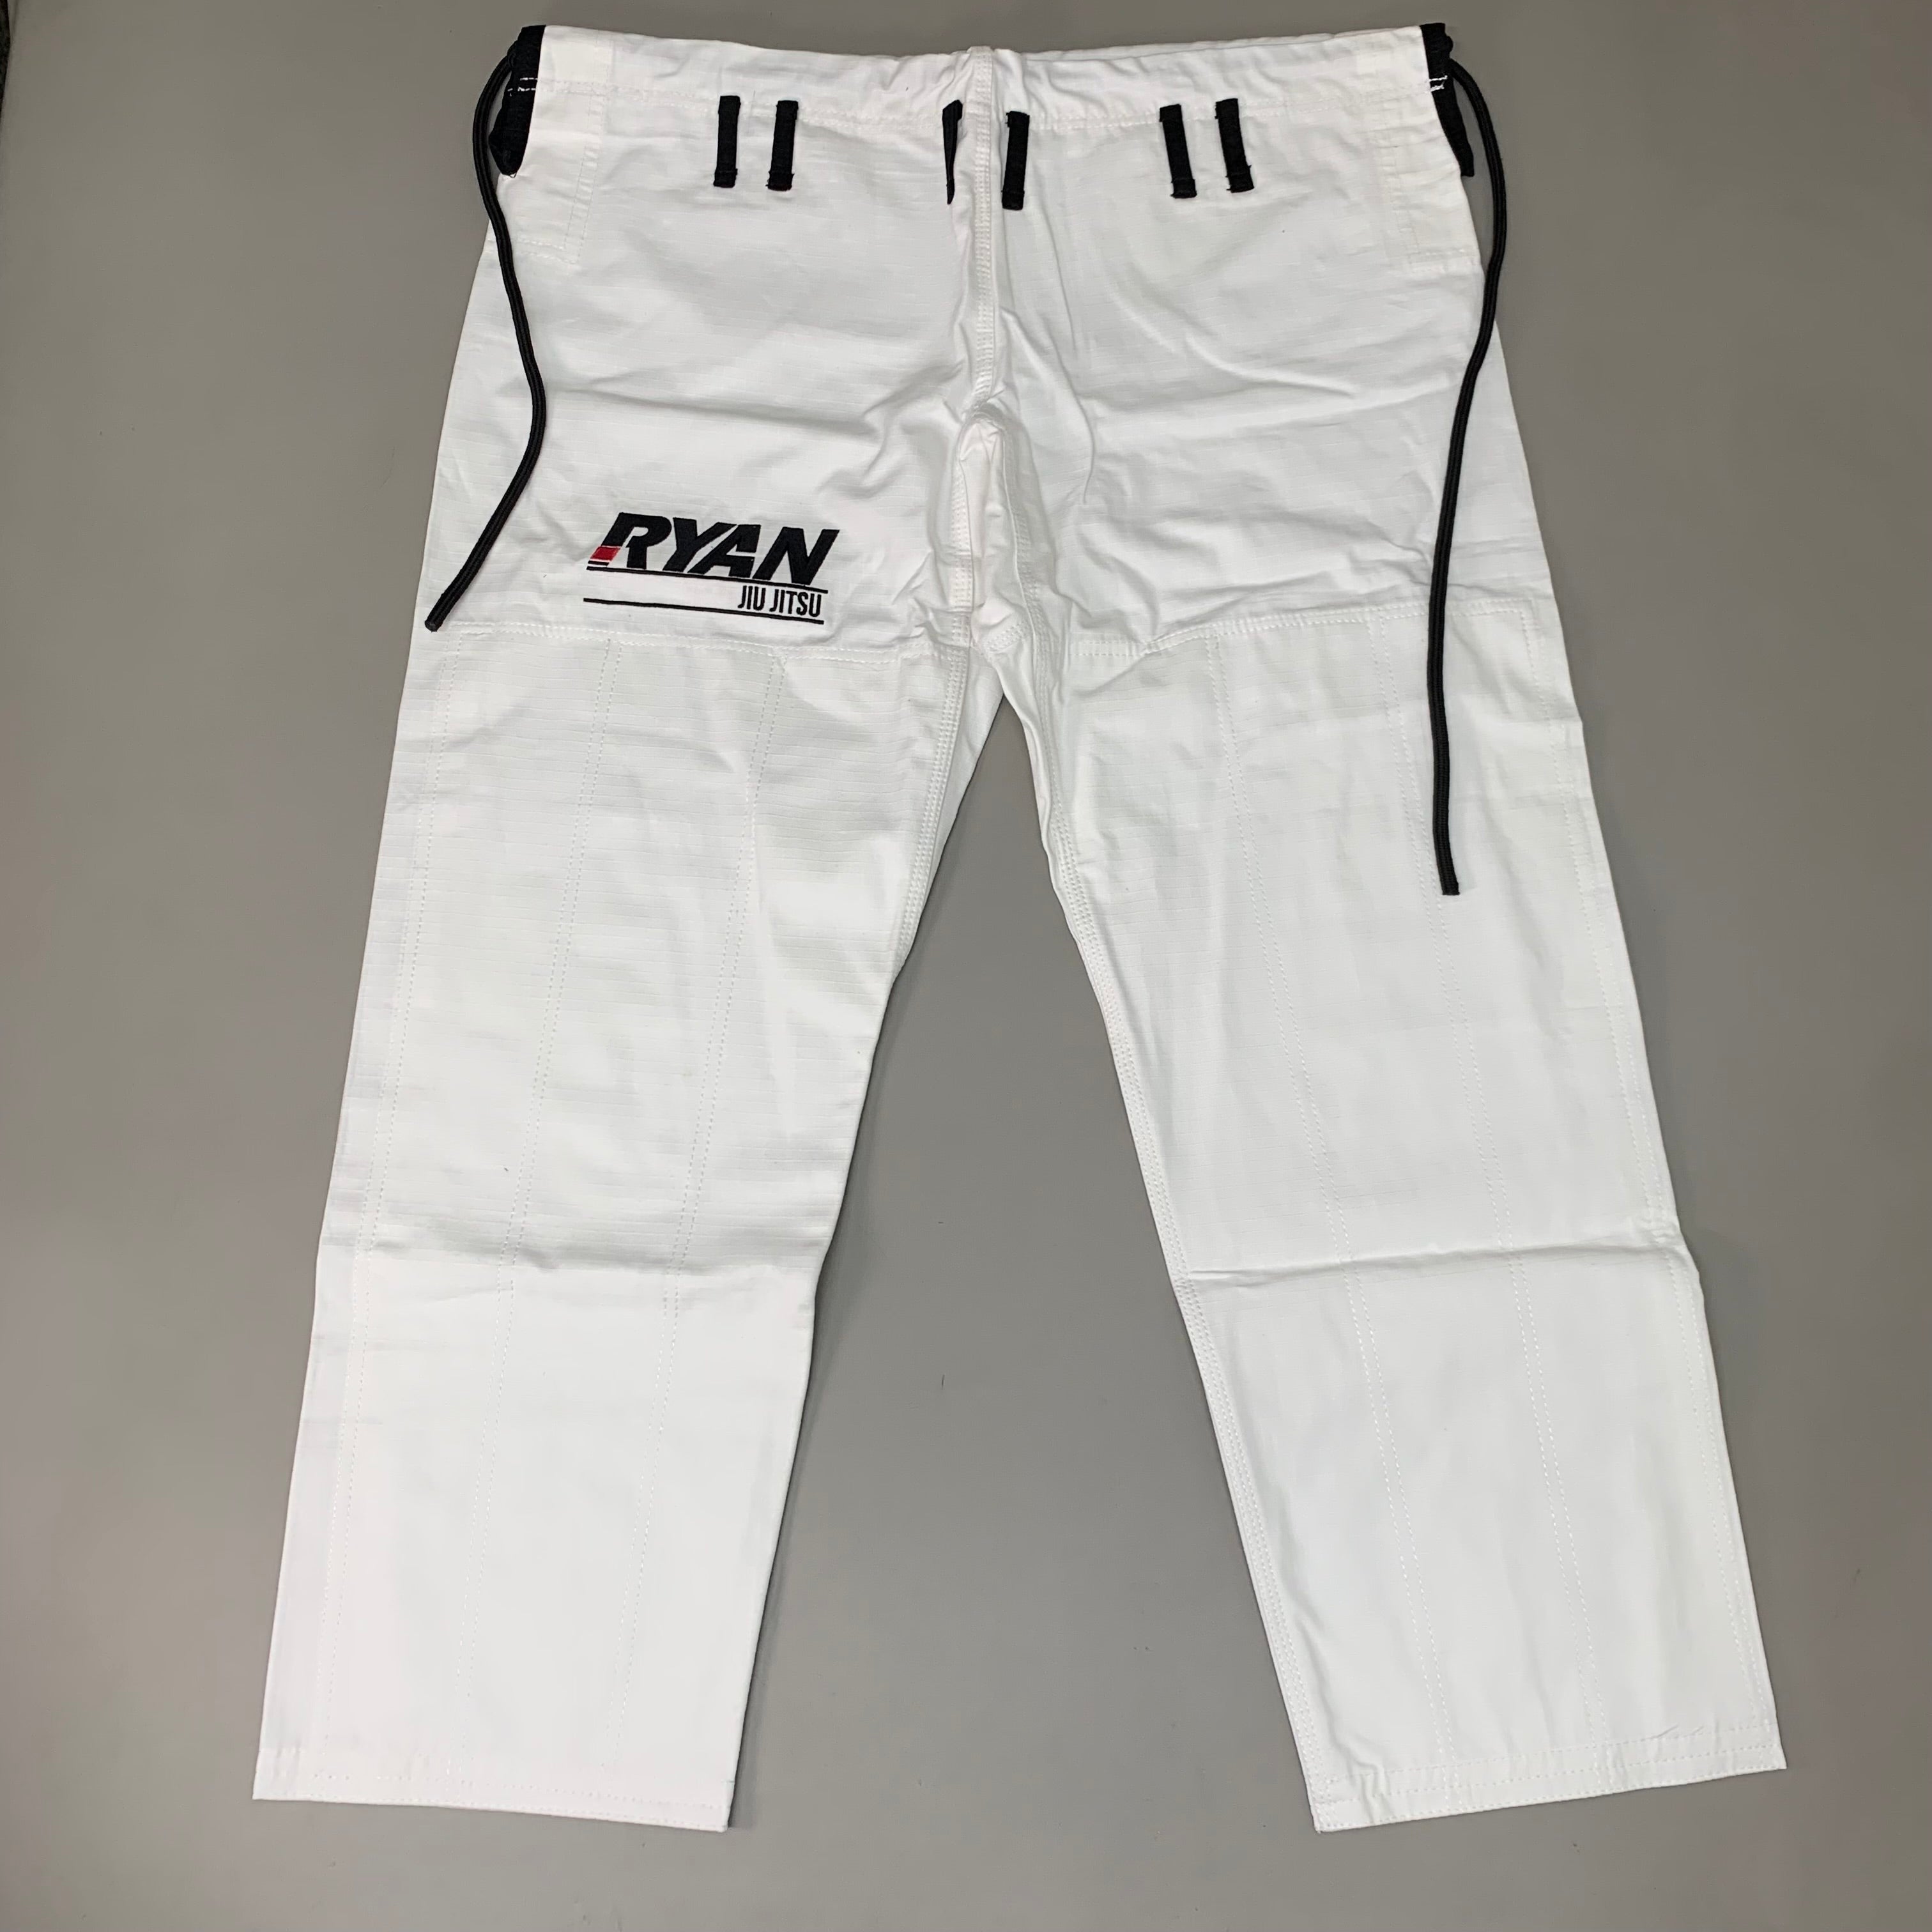 RYAN Jiu Jitsu Gear Pants and Gi Adult Size White